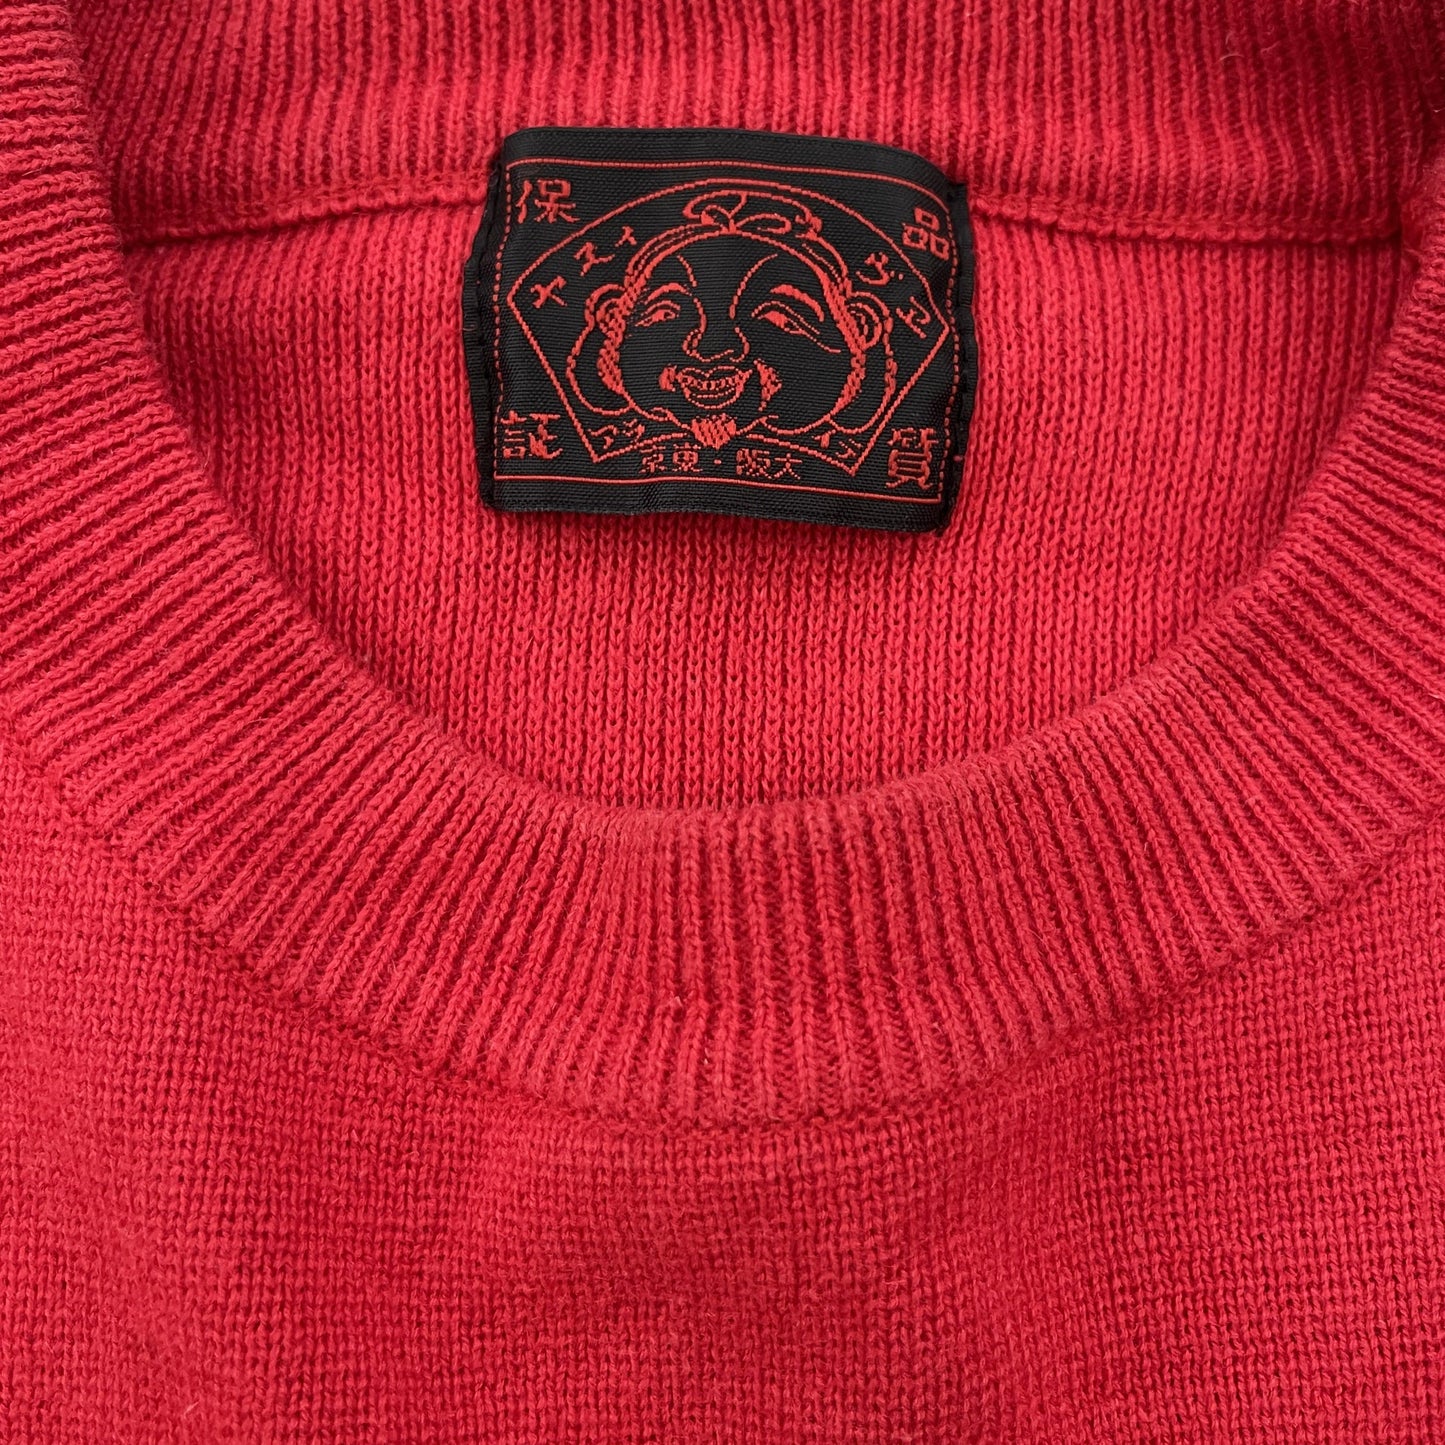 Evisu Yamane Knitted Sweater - Known Source